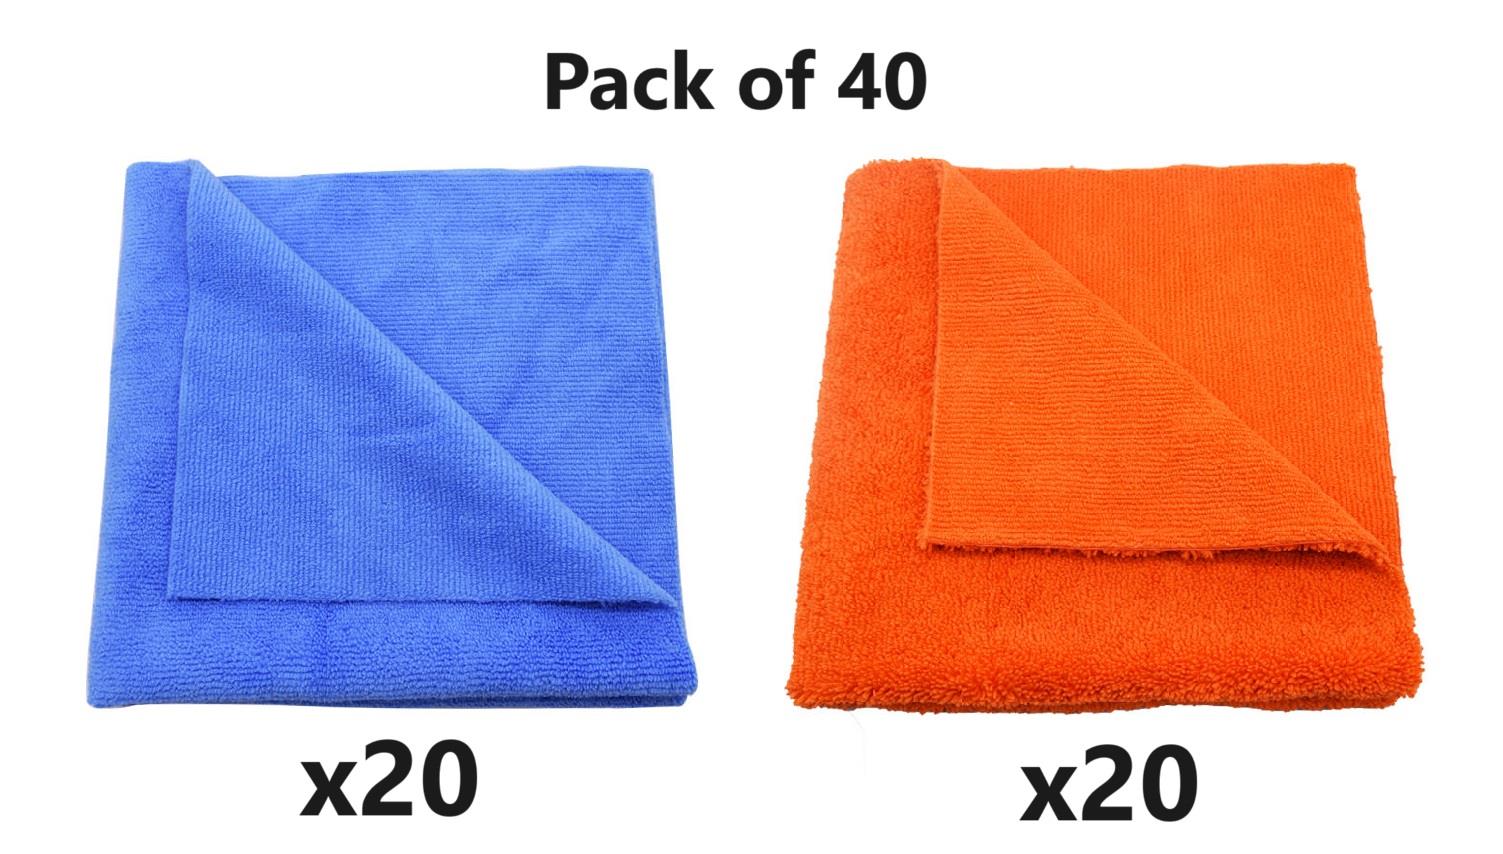 Pack of 40 Microfibre Cloths (20x  350gsm Warp Knit Edgeless, 20x 400gsm Tiger Edgeless)